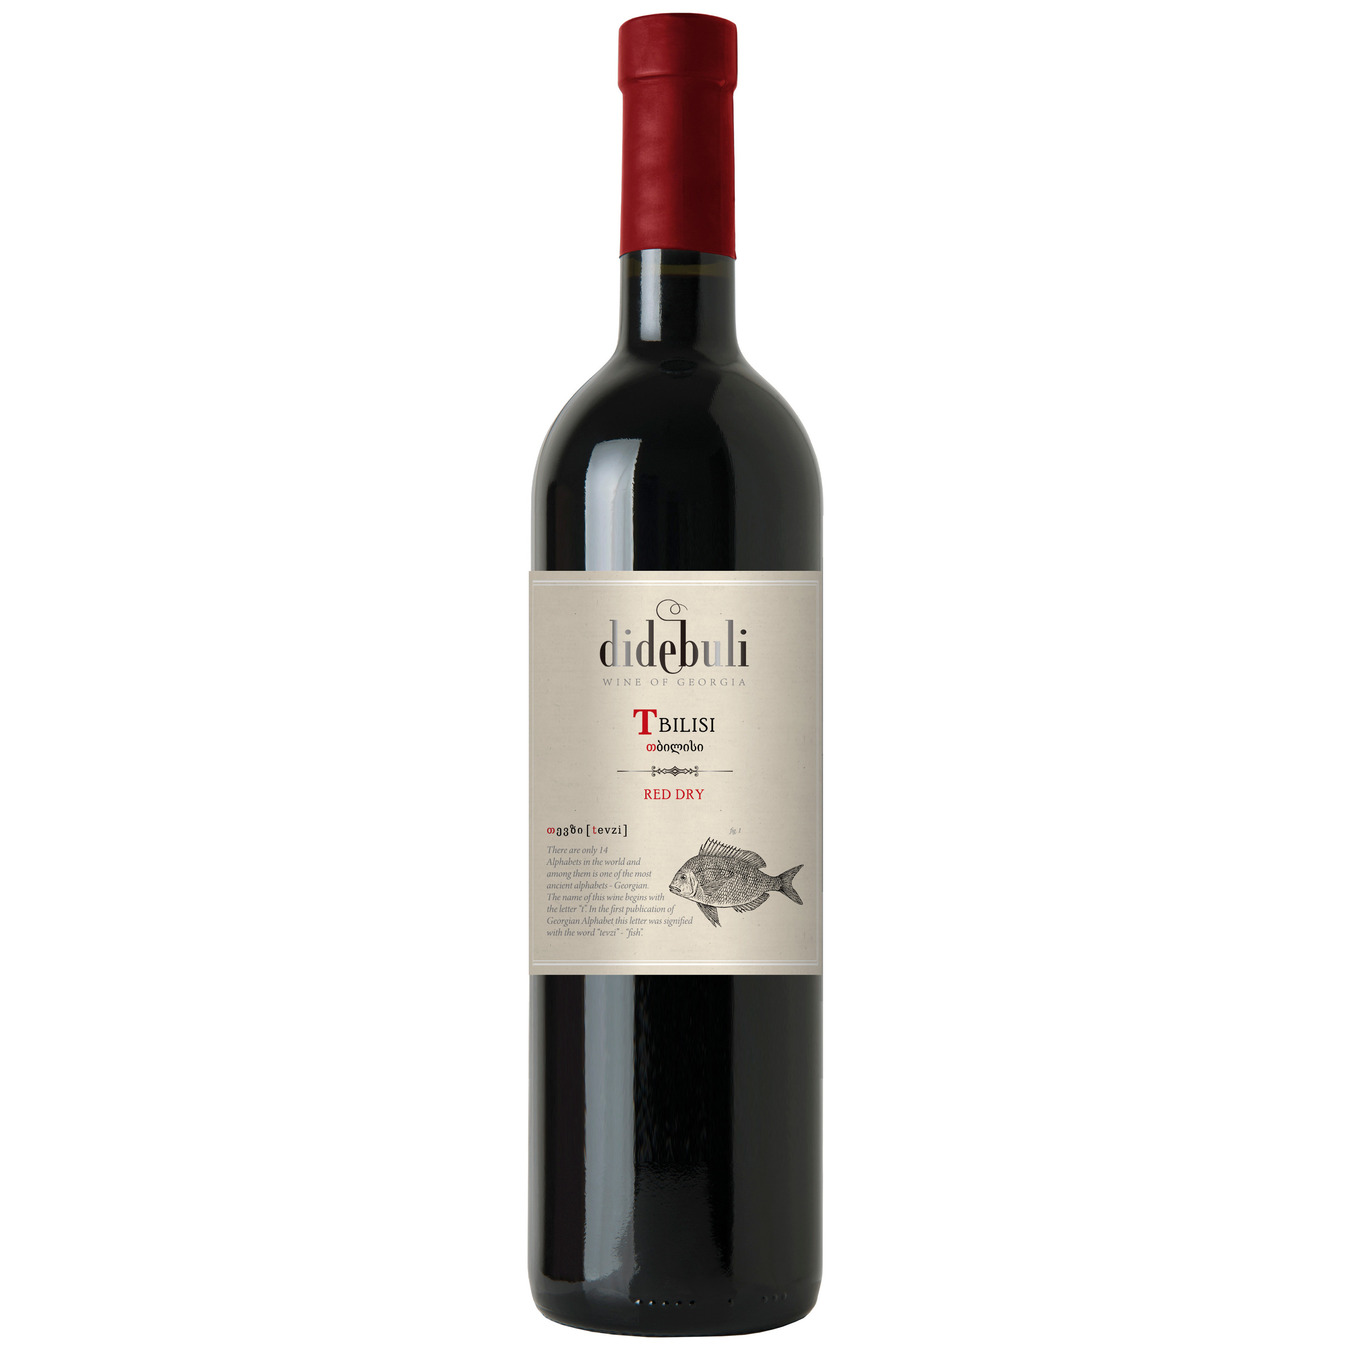 Didebuli Tbilisi red dry wine 11% 0,75l